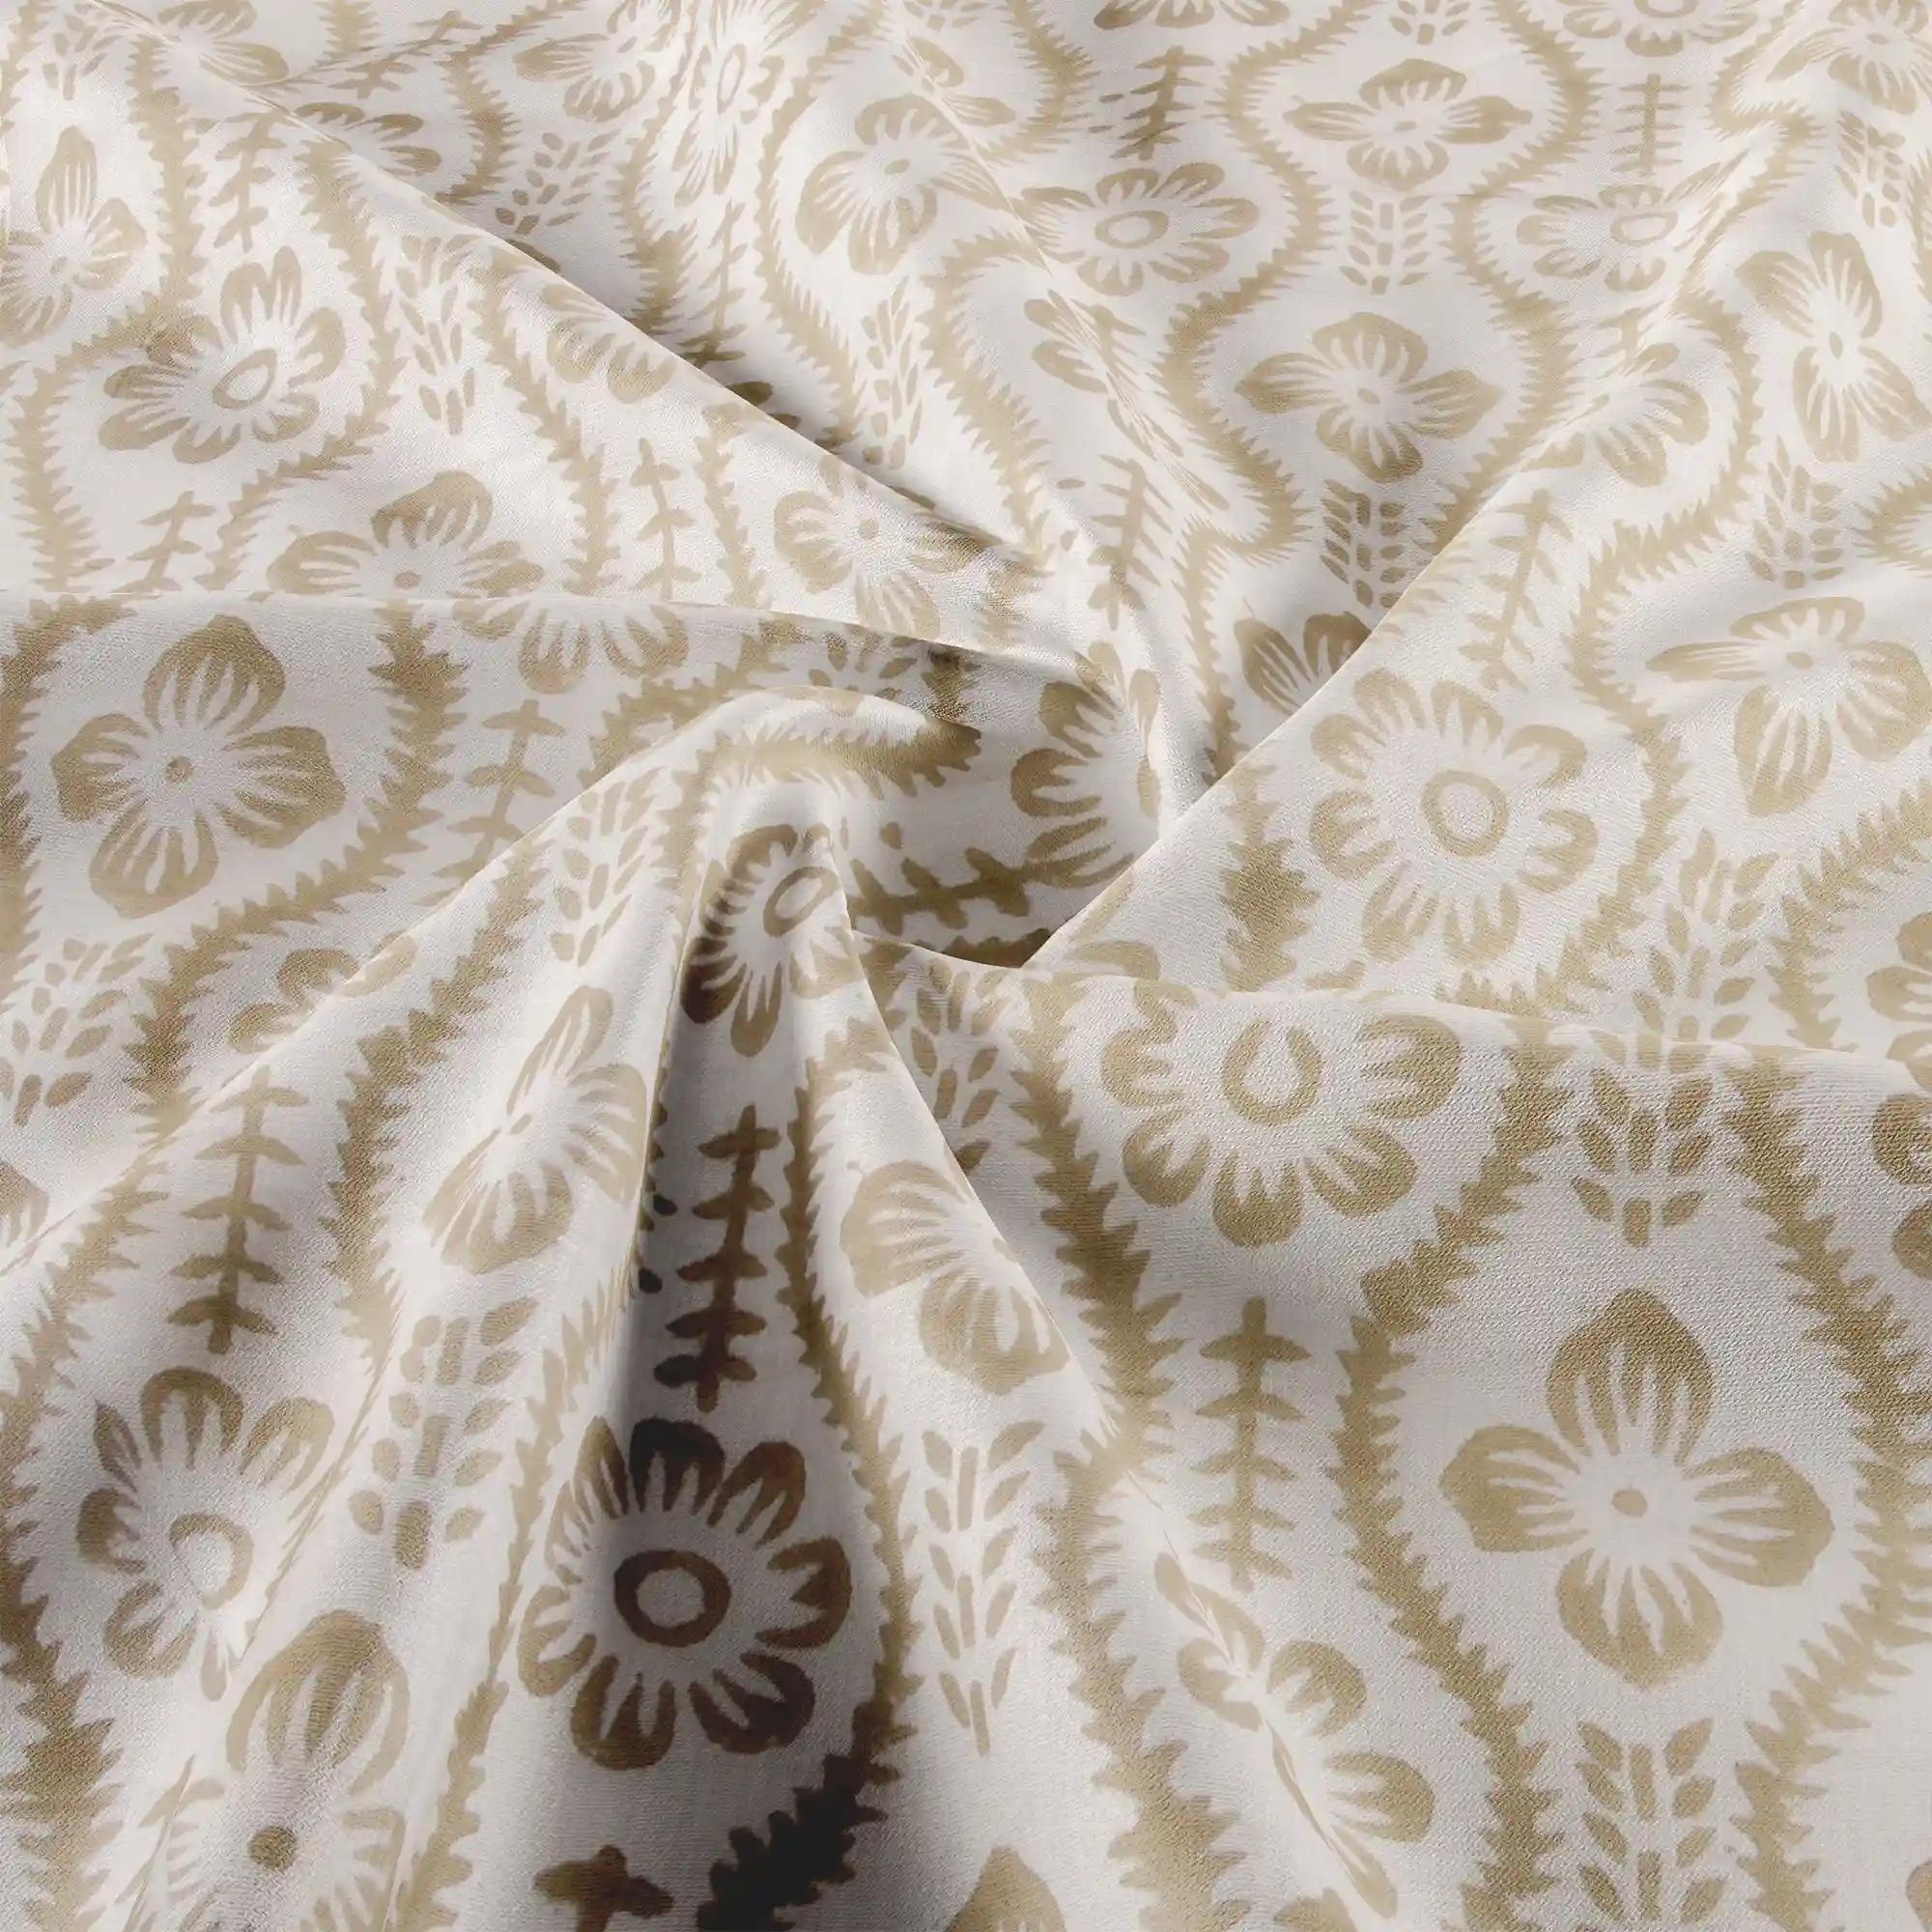 Jaipur Dohar Hand Block Printed Single Bed Cotton Dohar - Orange Grey Floral